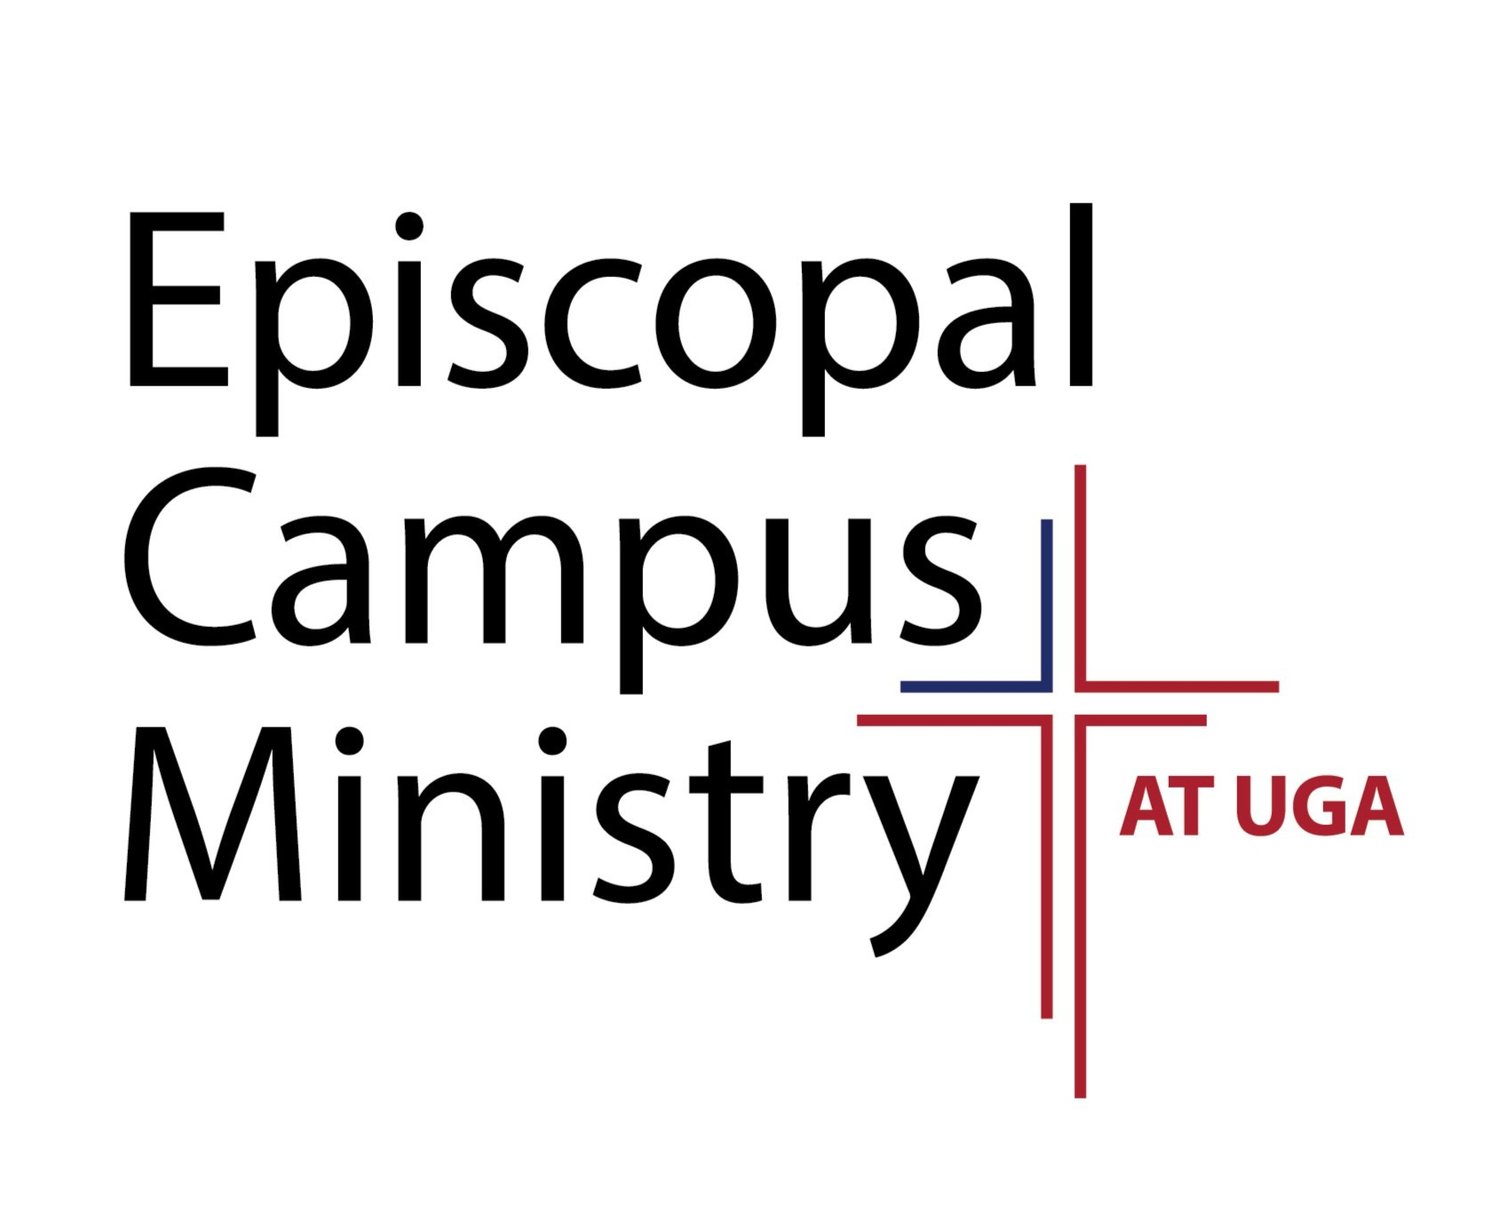 Episcopal Campus Ministry at UGA